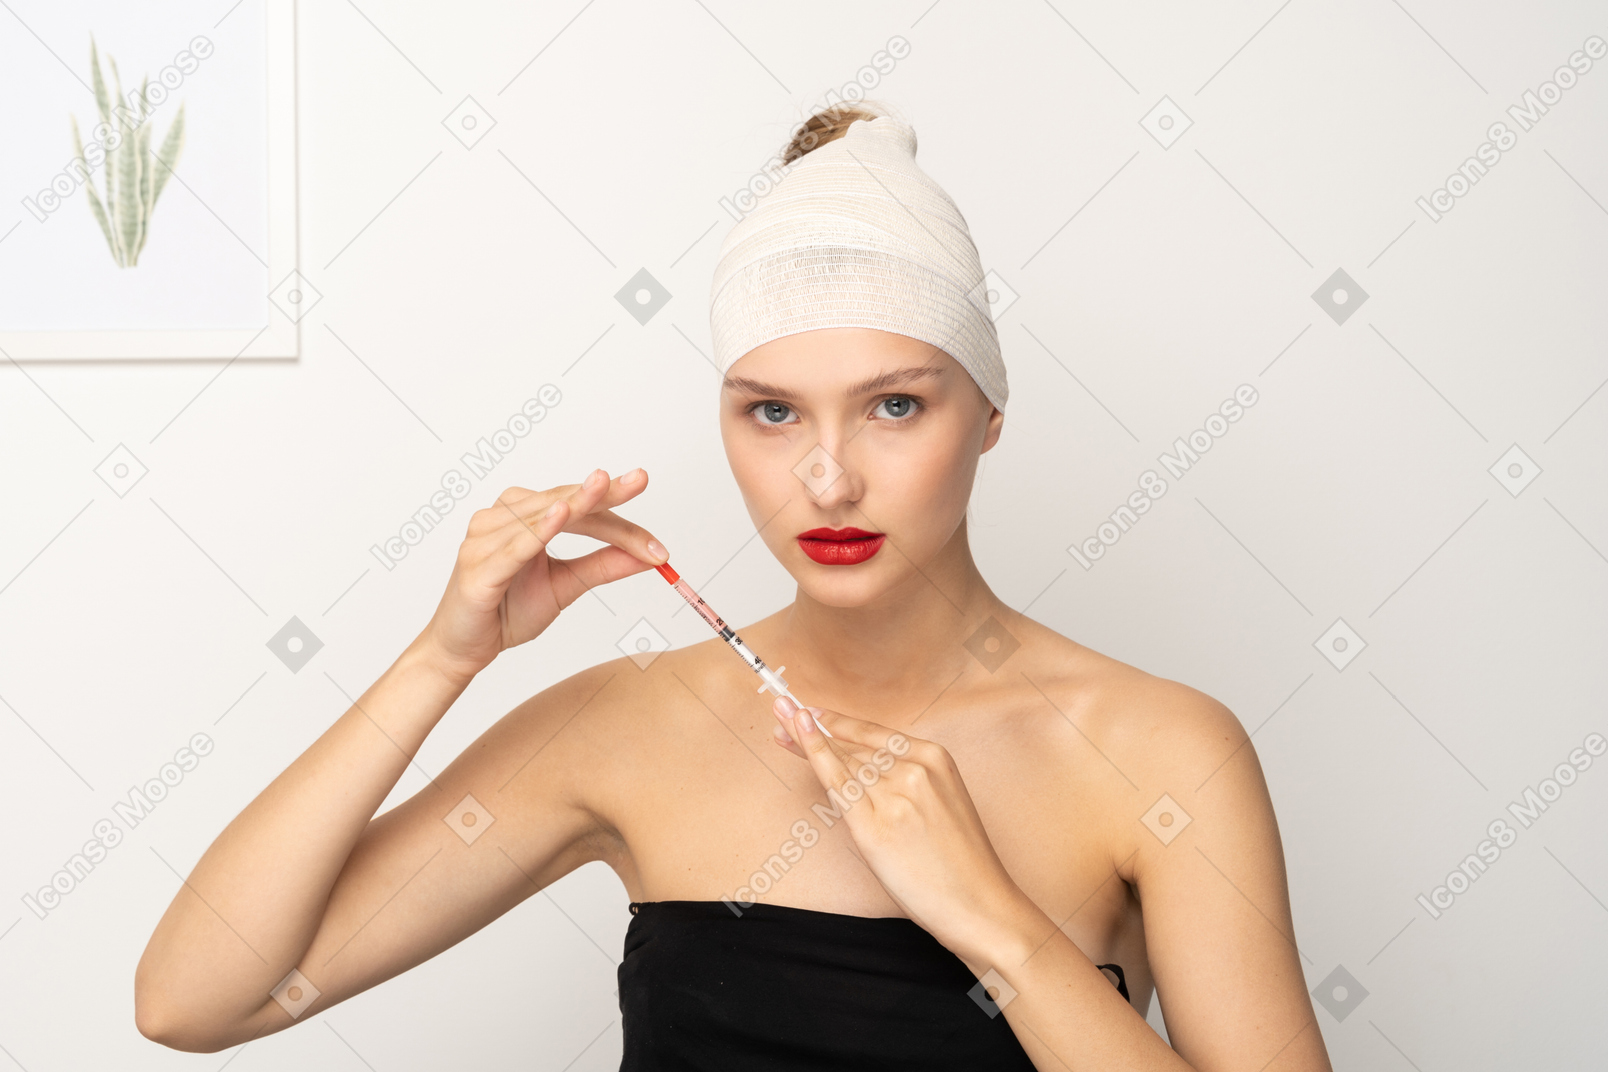 Young woman with bandaged head holding syringe